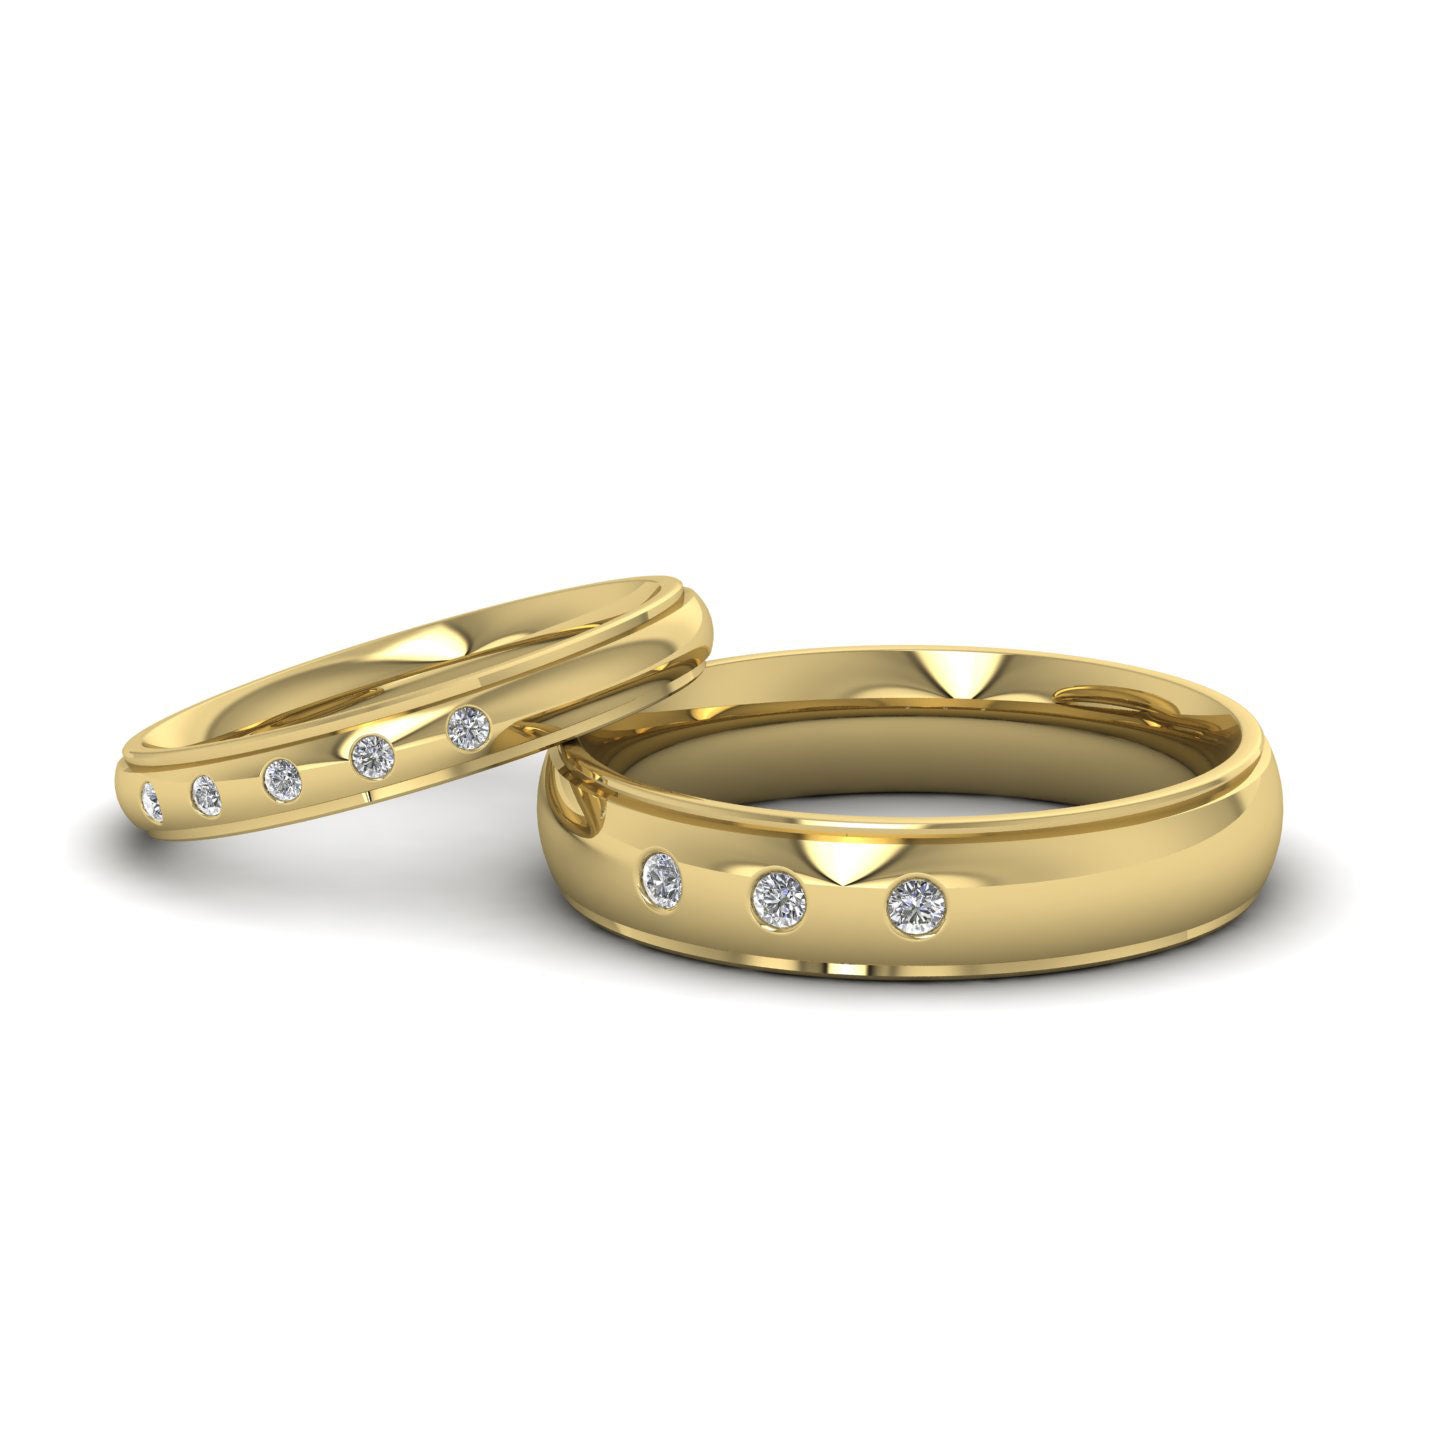 Line Pattern And Five Diamond Set 18ct Yellow Gold 3mm Wedding Ring